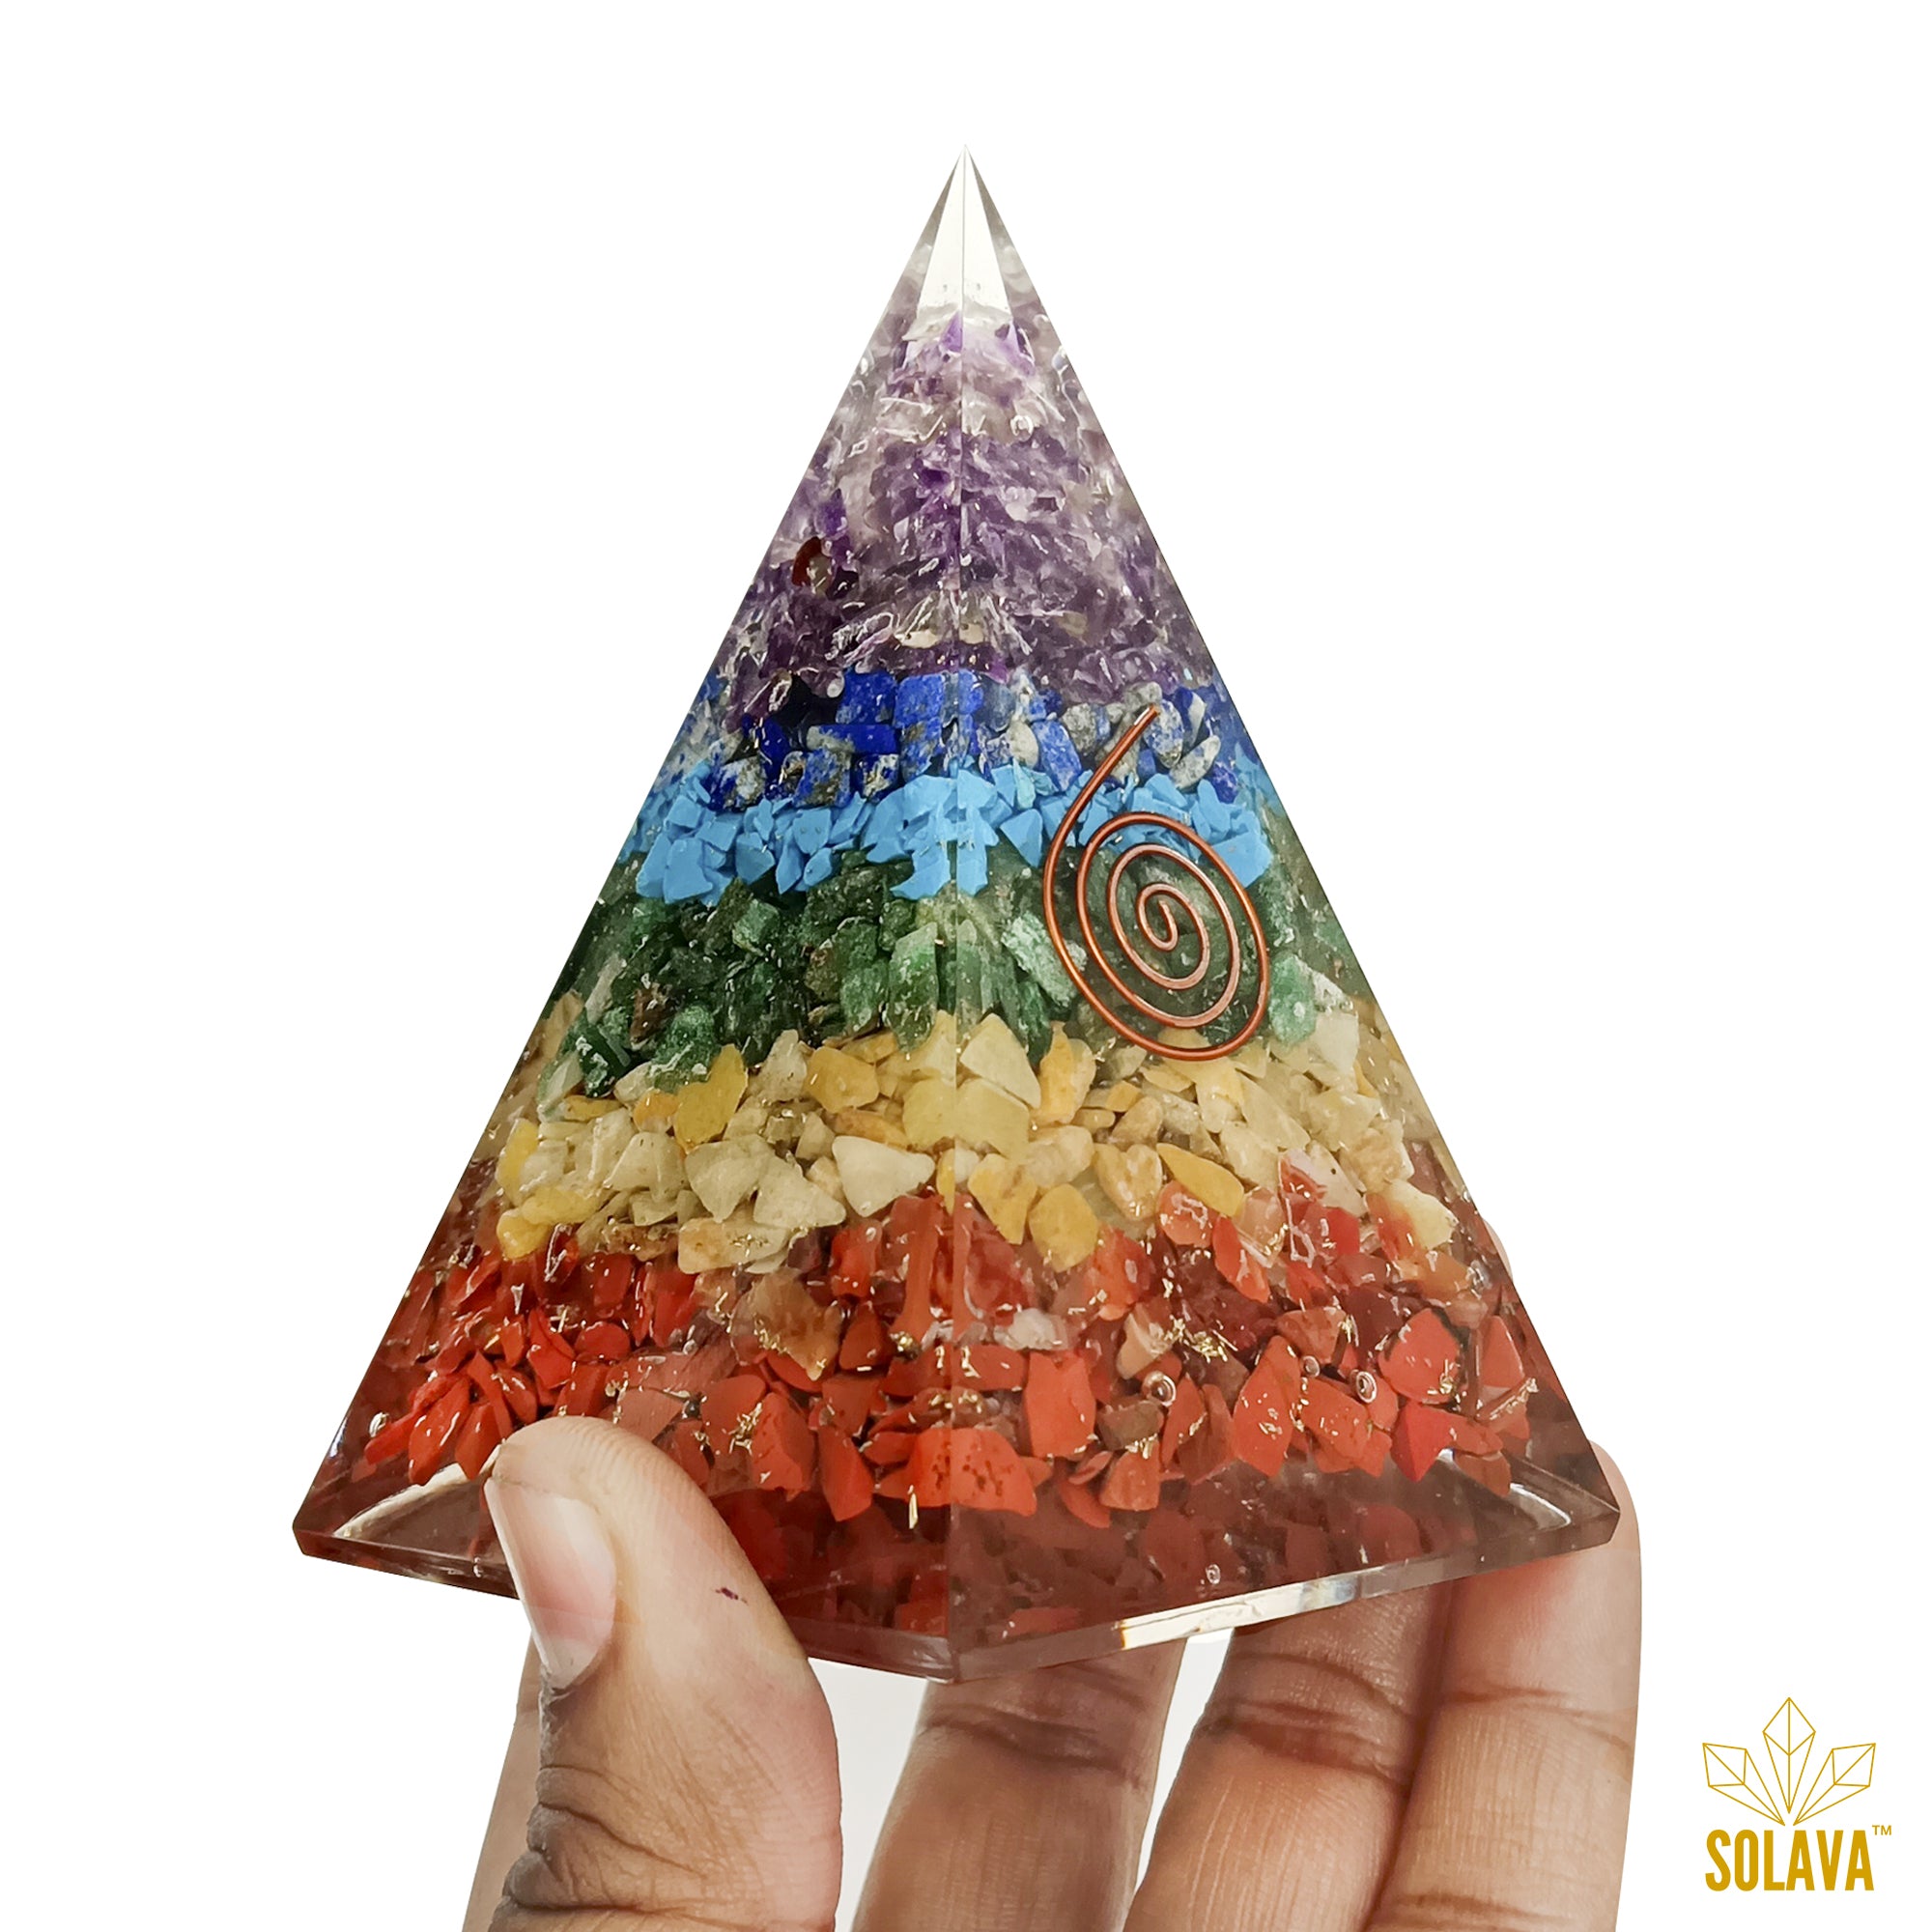 Original Seven Chakra Pyramid - 4 Inch